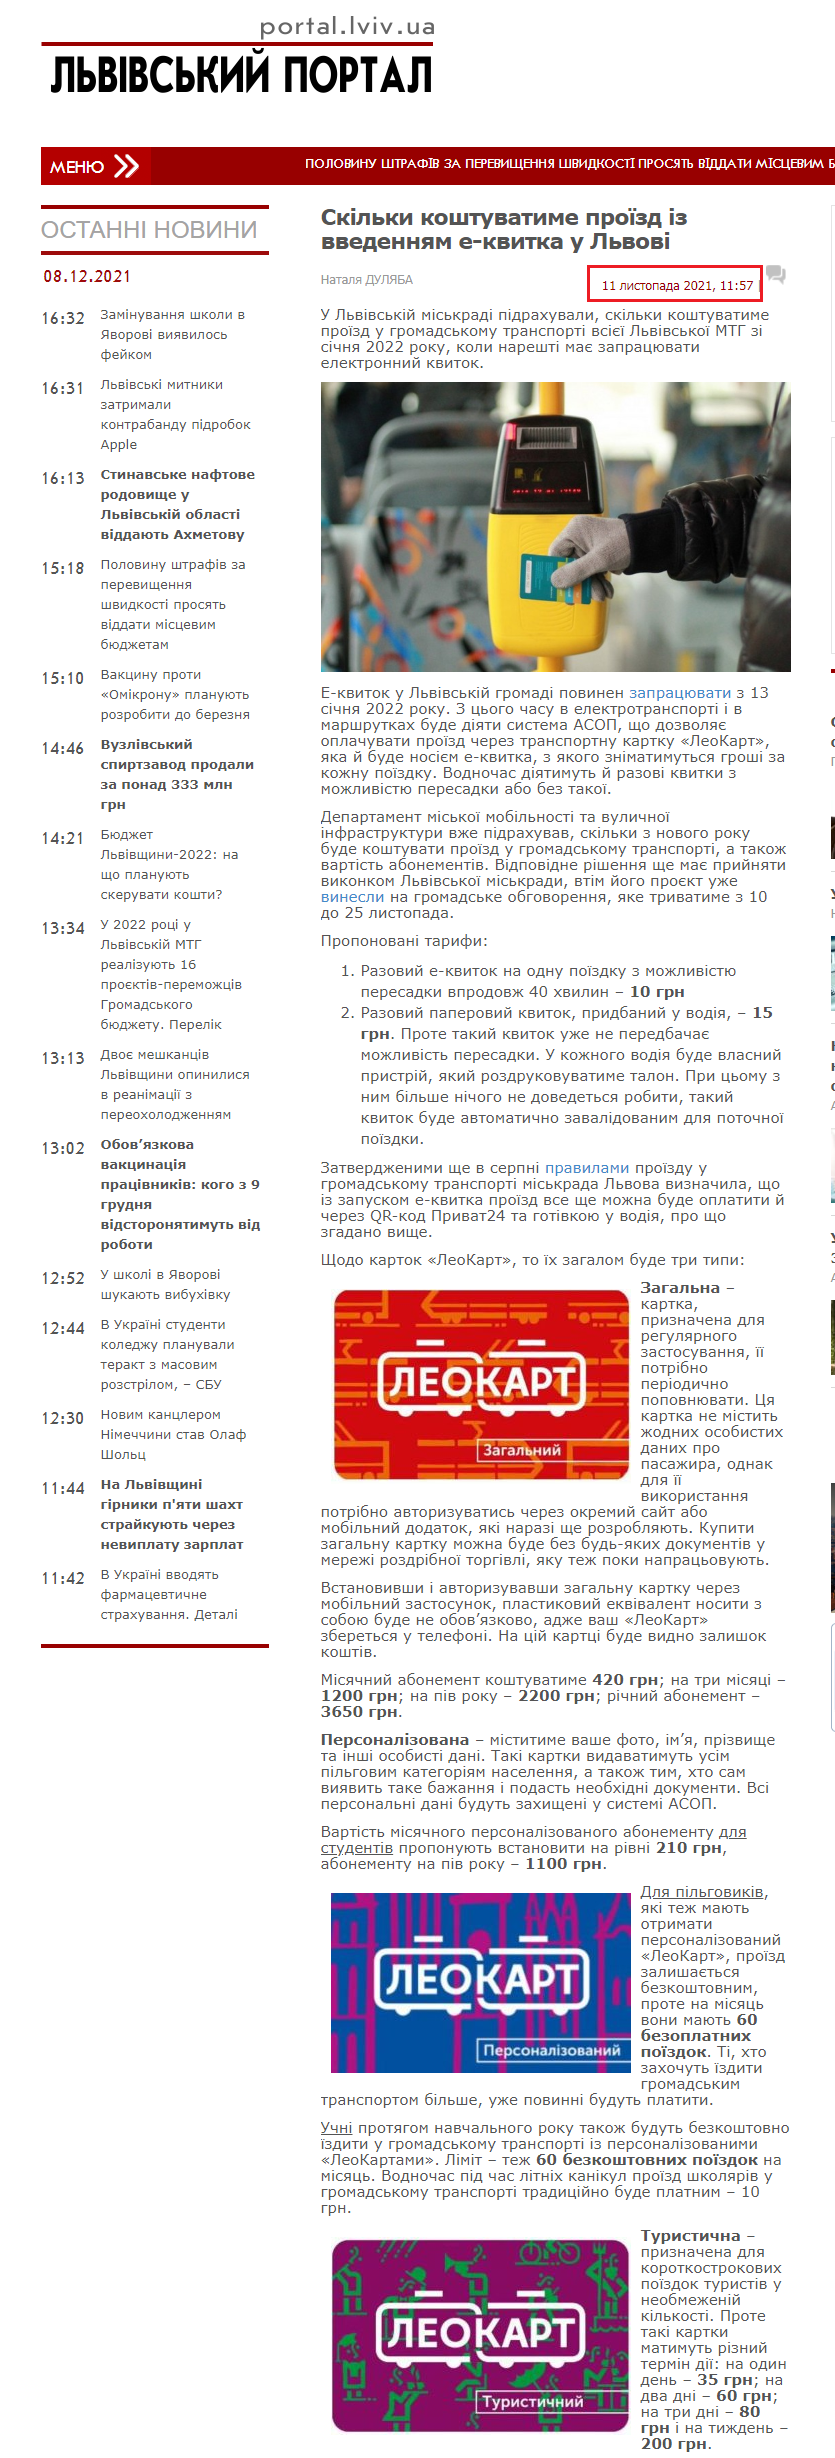 https://portal.lviv.ua/news/2021/11/11/skilky-koshtuvatyme-proizd-iz-vvedenniam-e-kvytka-u-lvovi